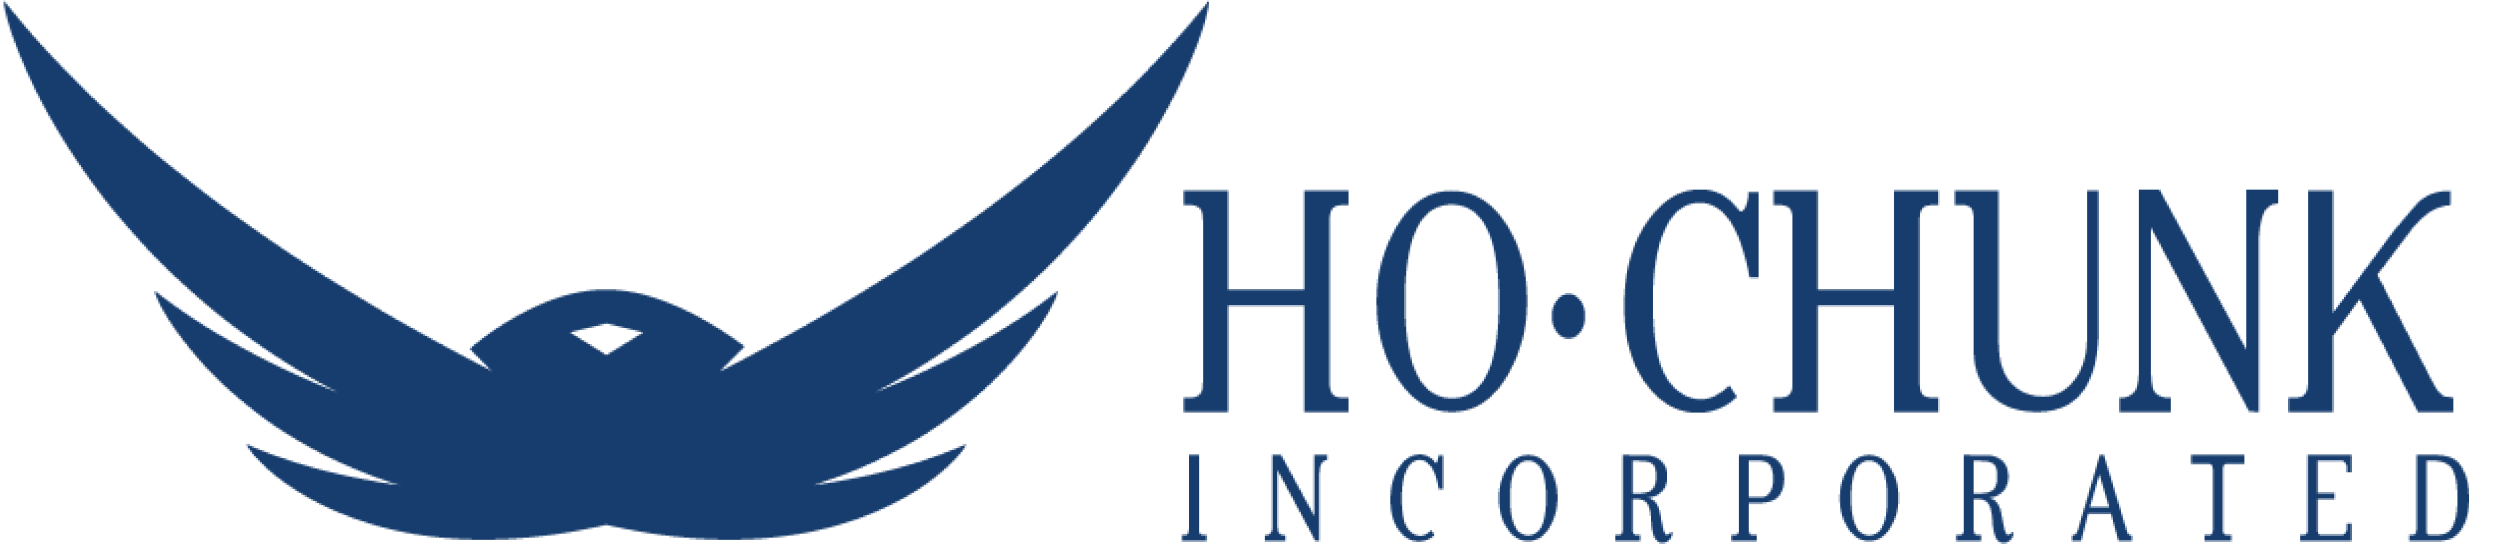 Economic Development Corporation | Ho-Chunk Inc. Logo